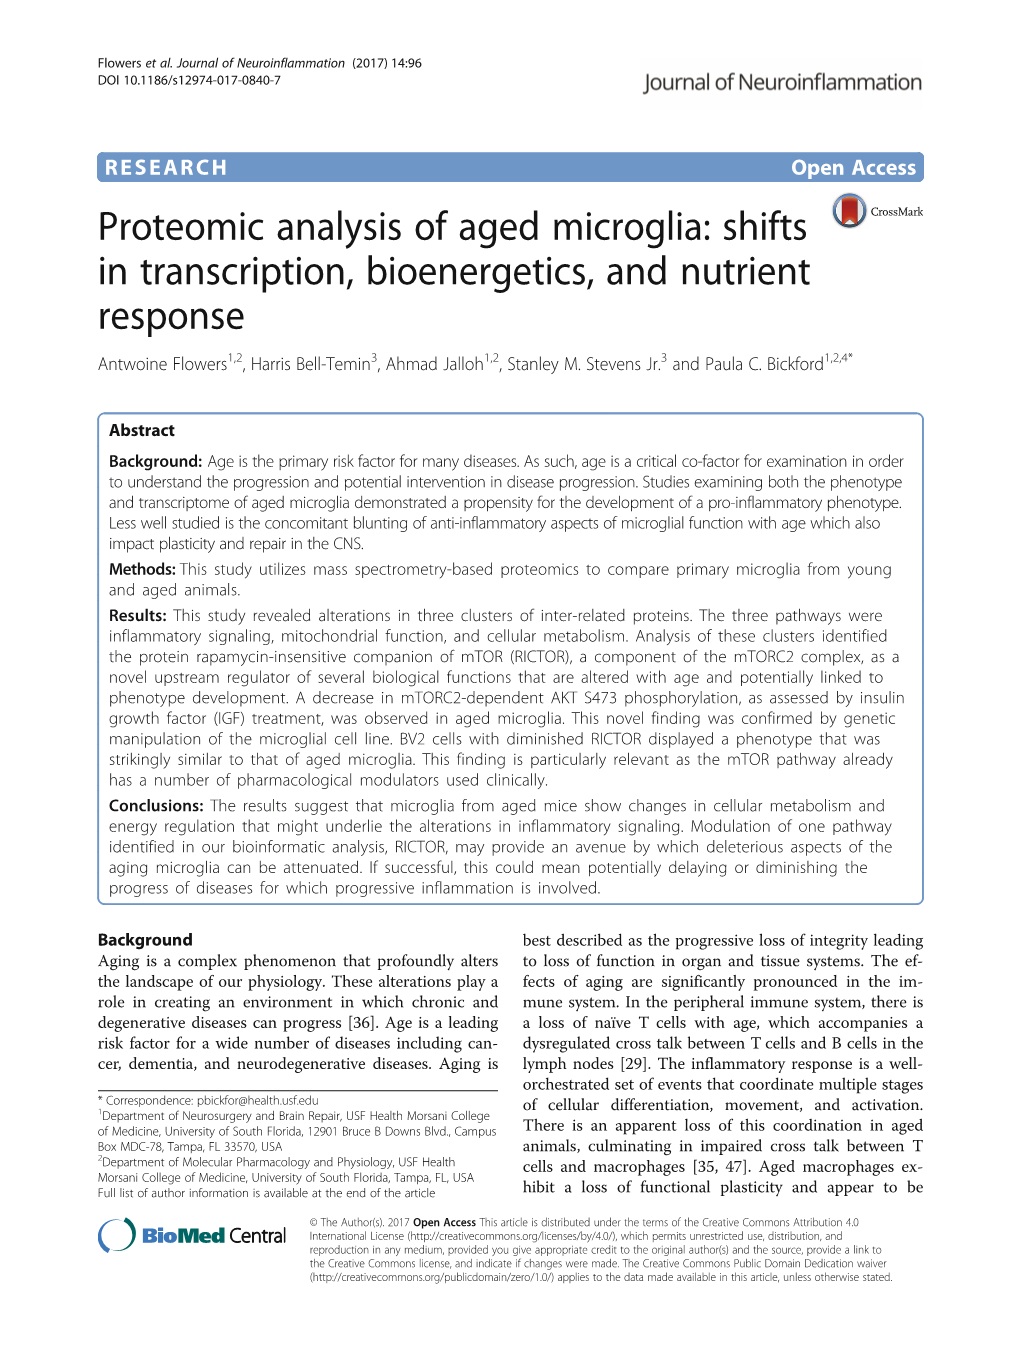 Proteomic Analysis of Aged Microglia